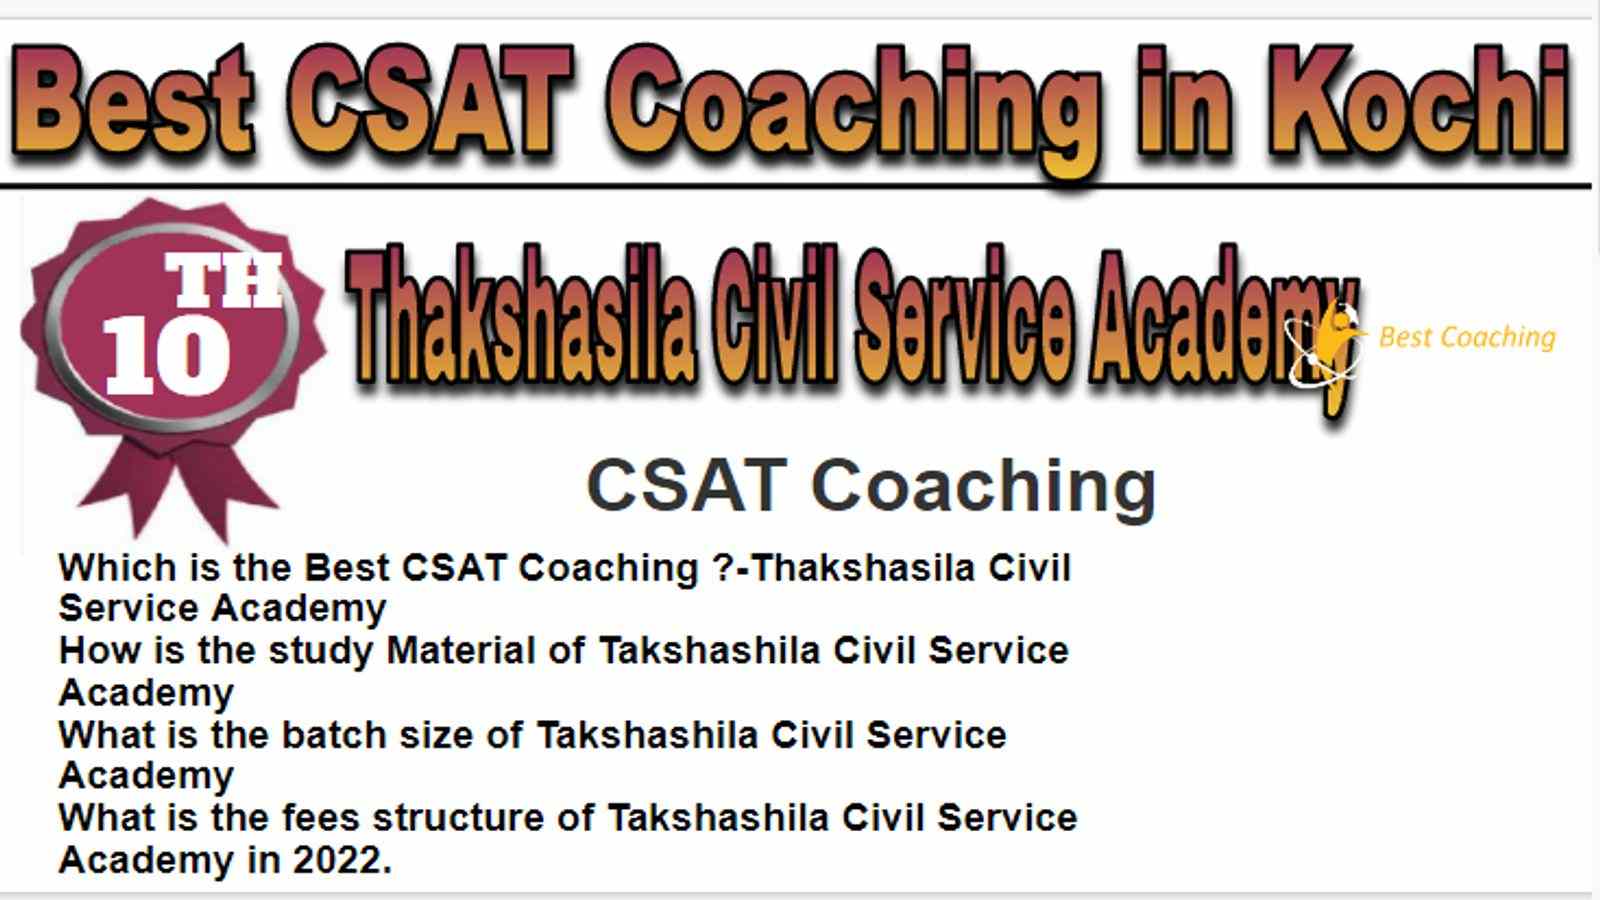 Rank 10 Best CSAT Coaching in Kochi